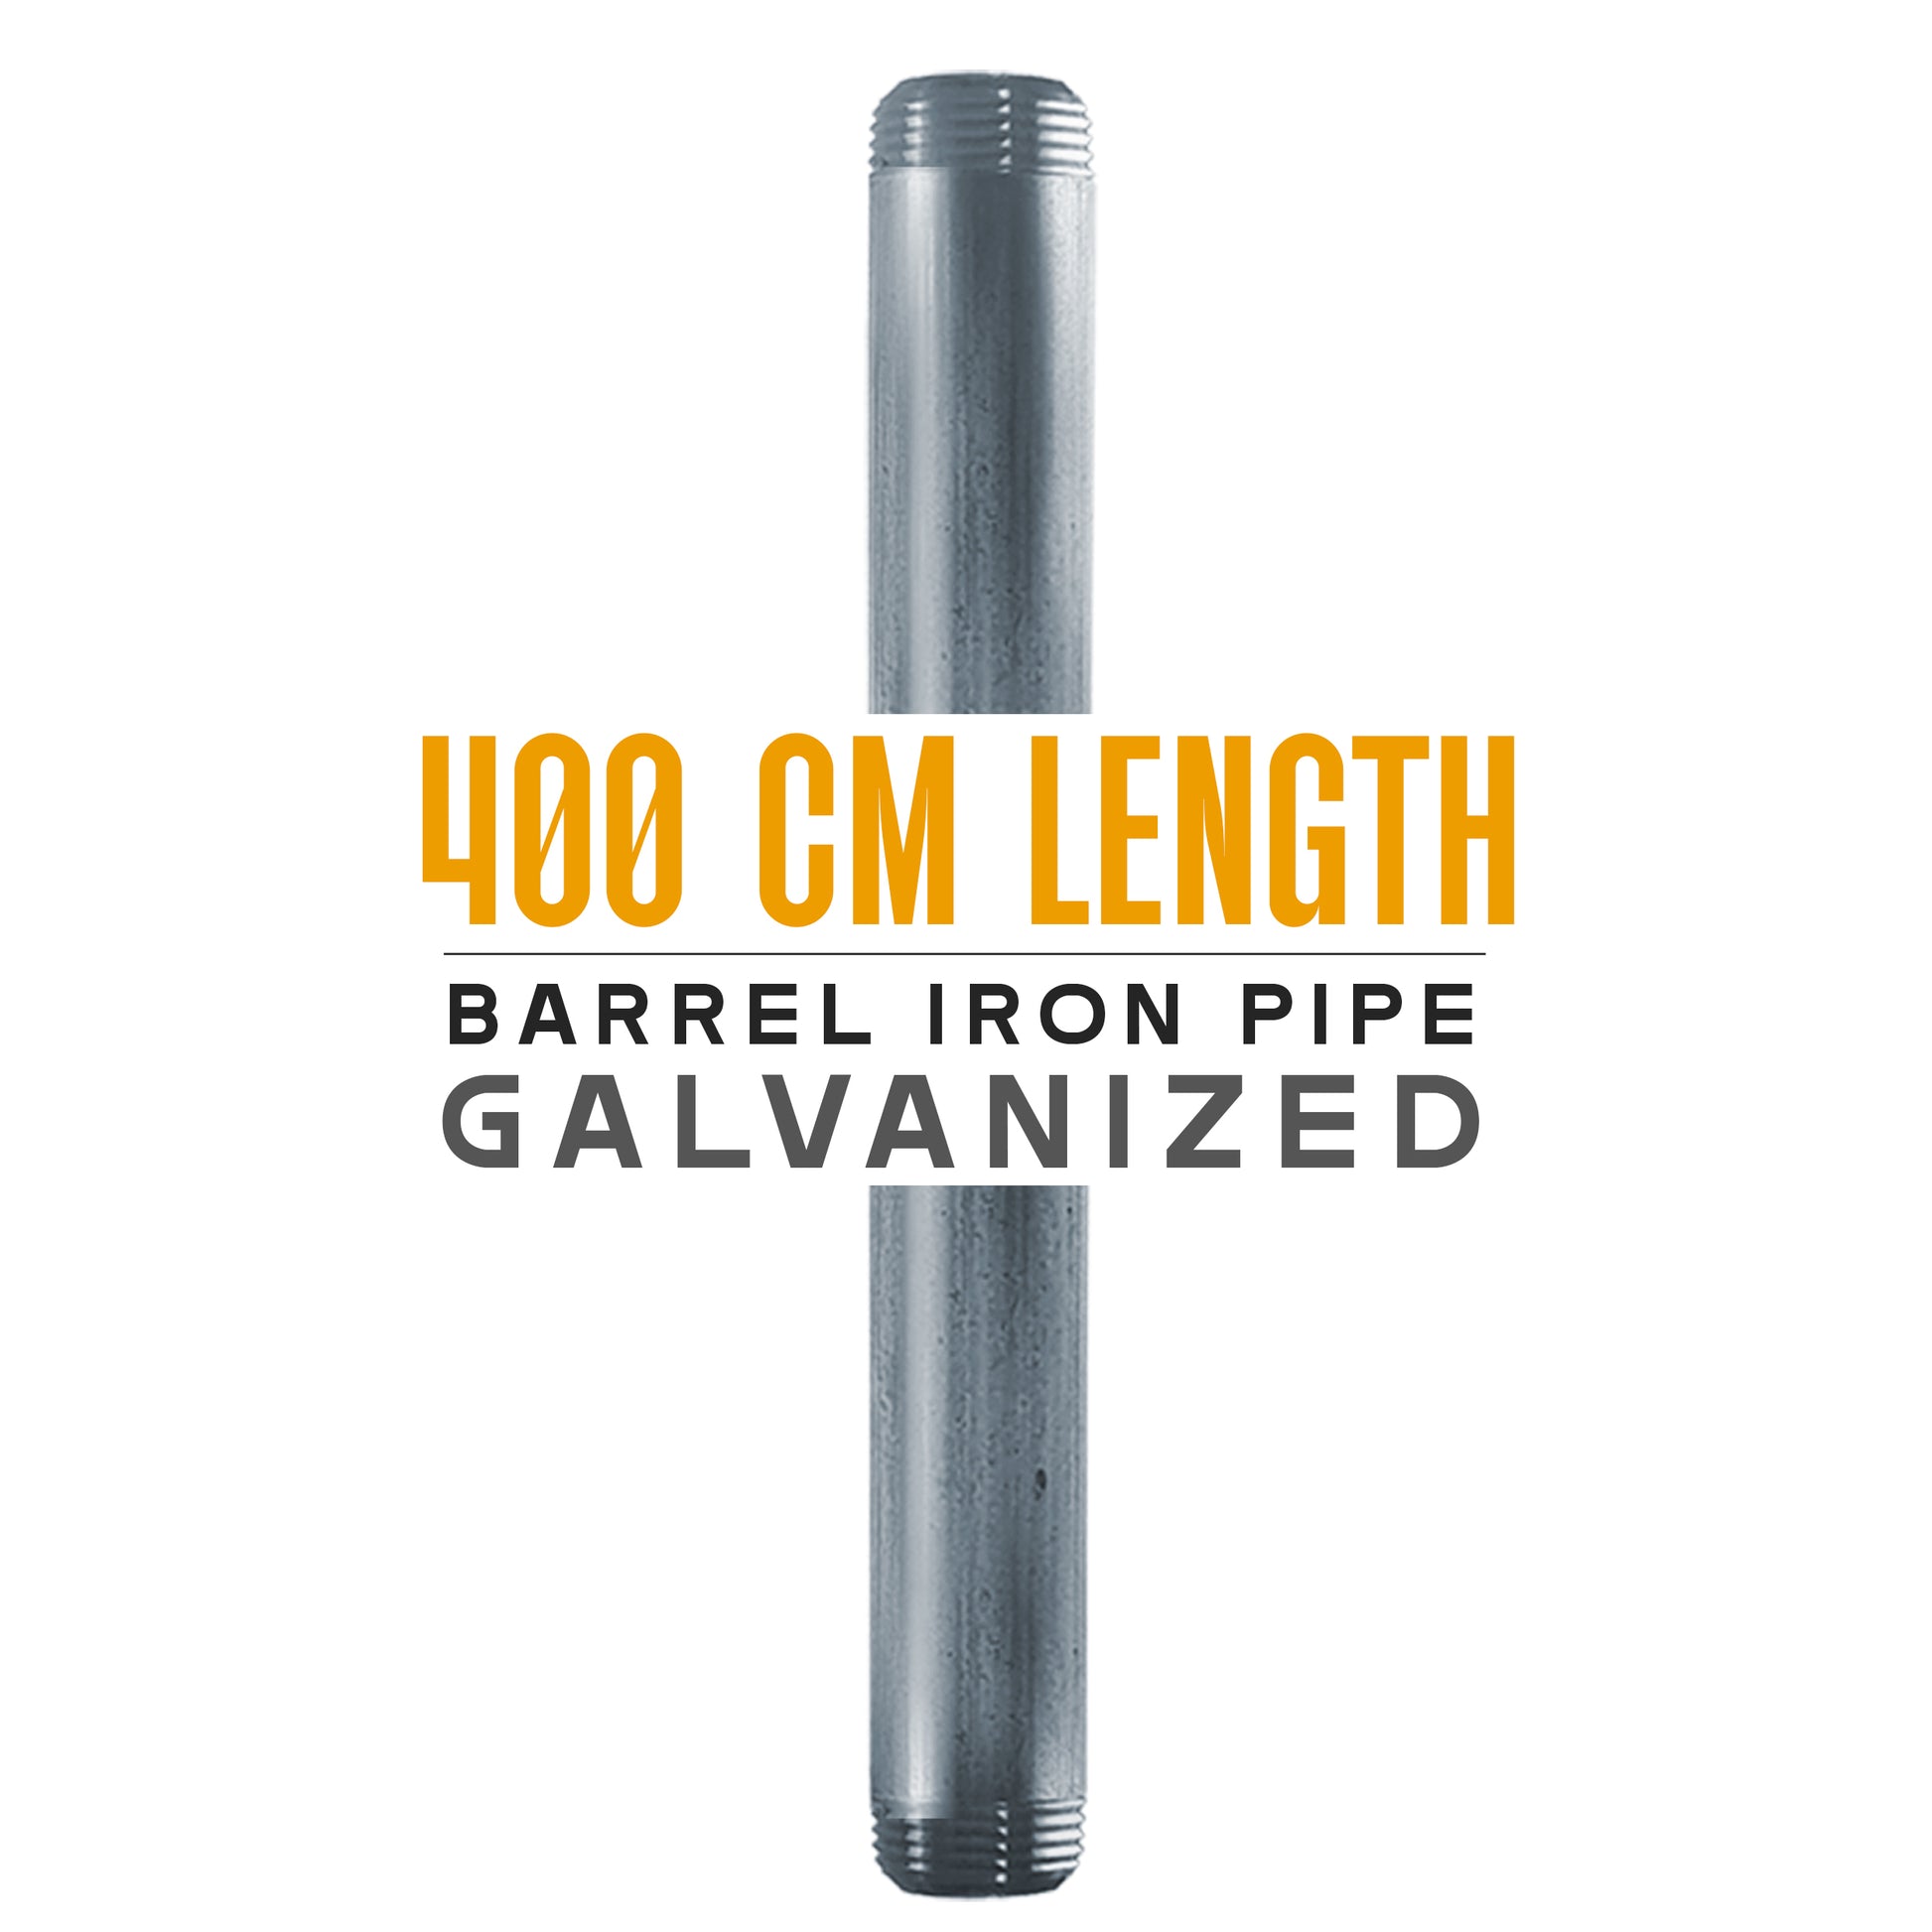 400cm ¾ BSP Galvanized MALLEABLE Tubing Iron threaded Pipe Light Fittings~4562